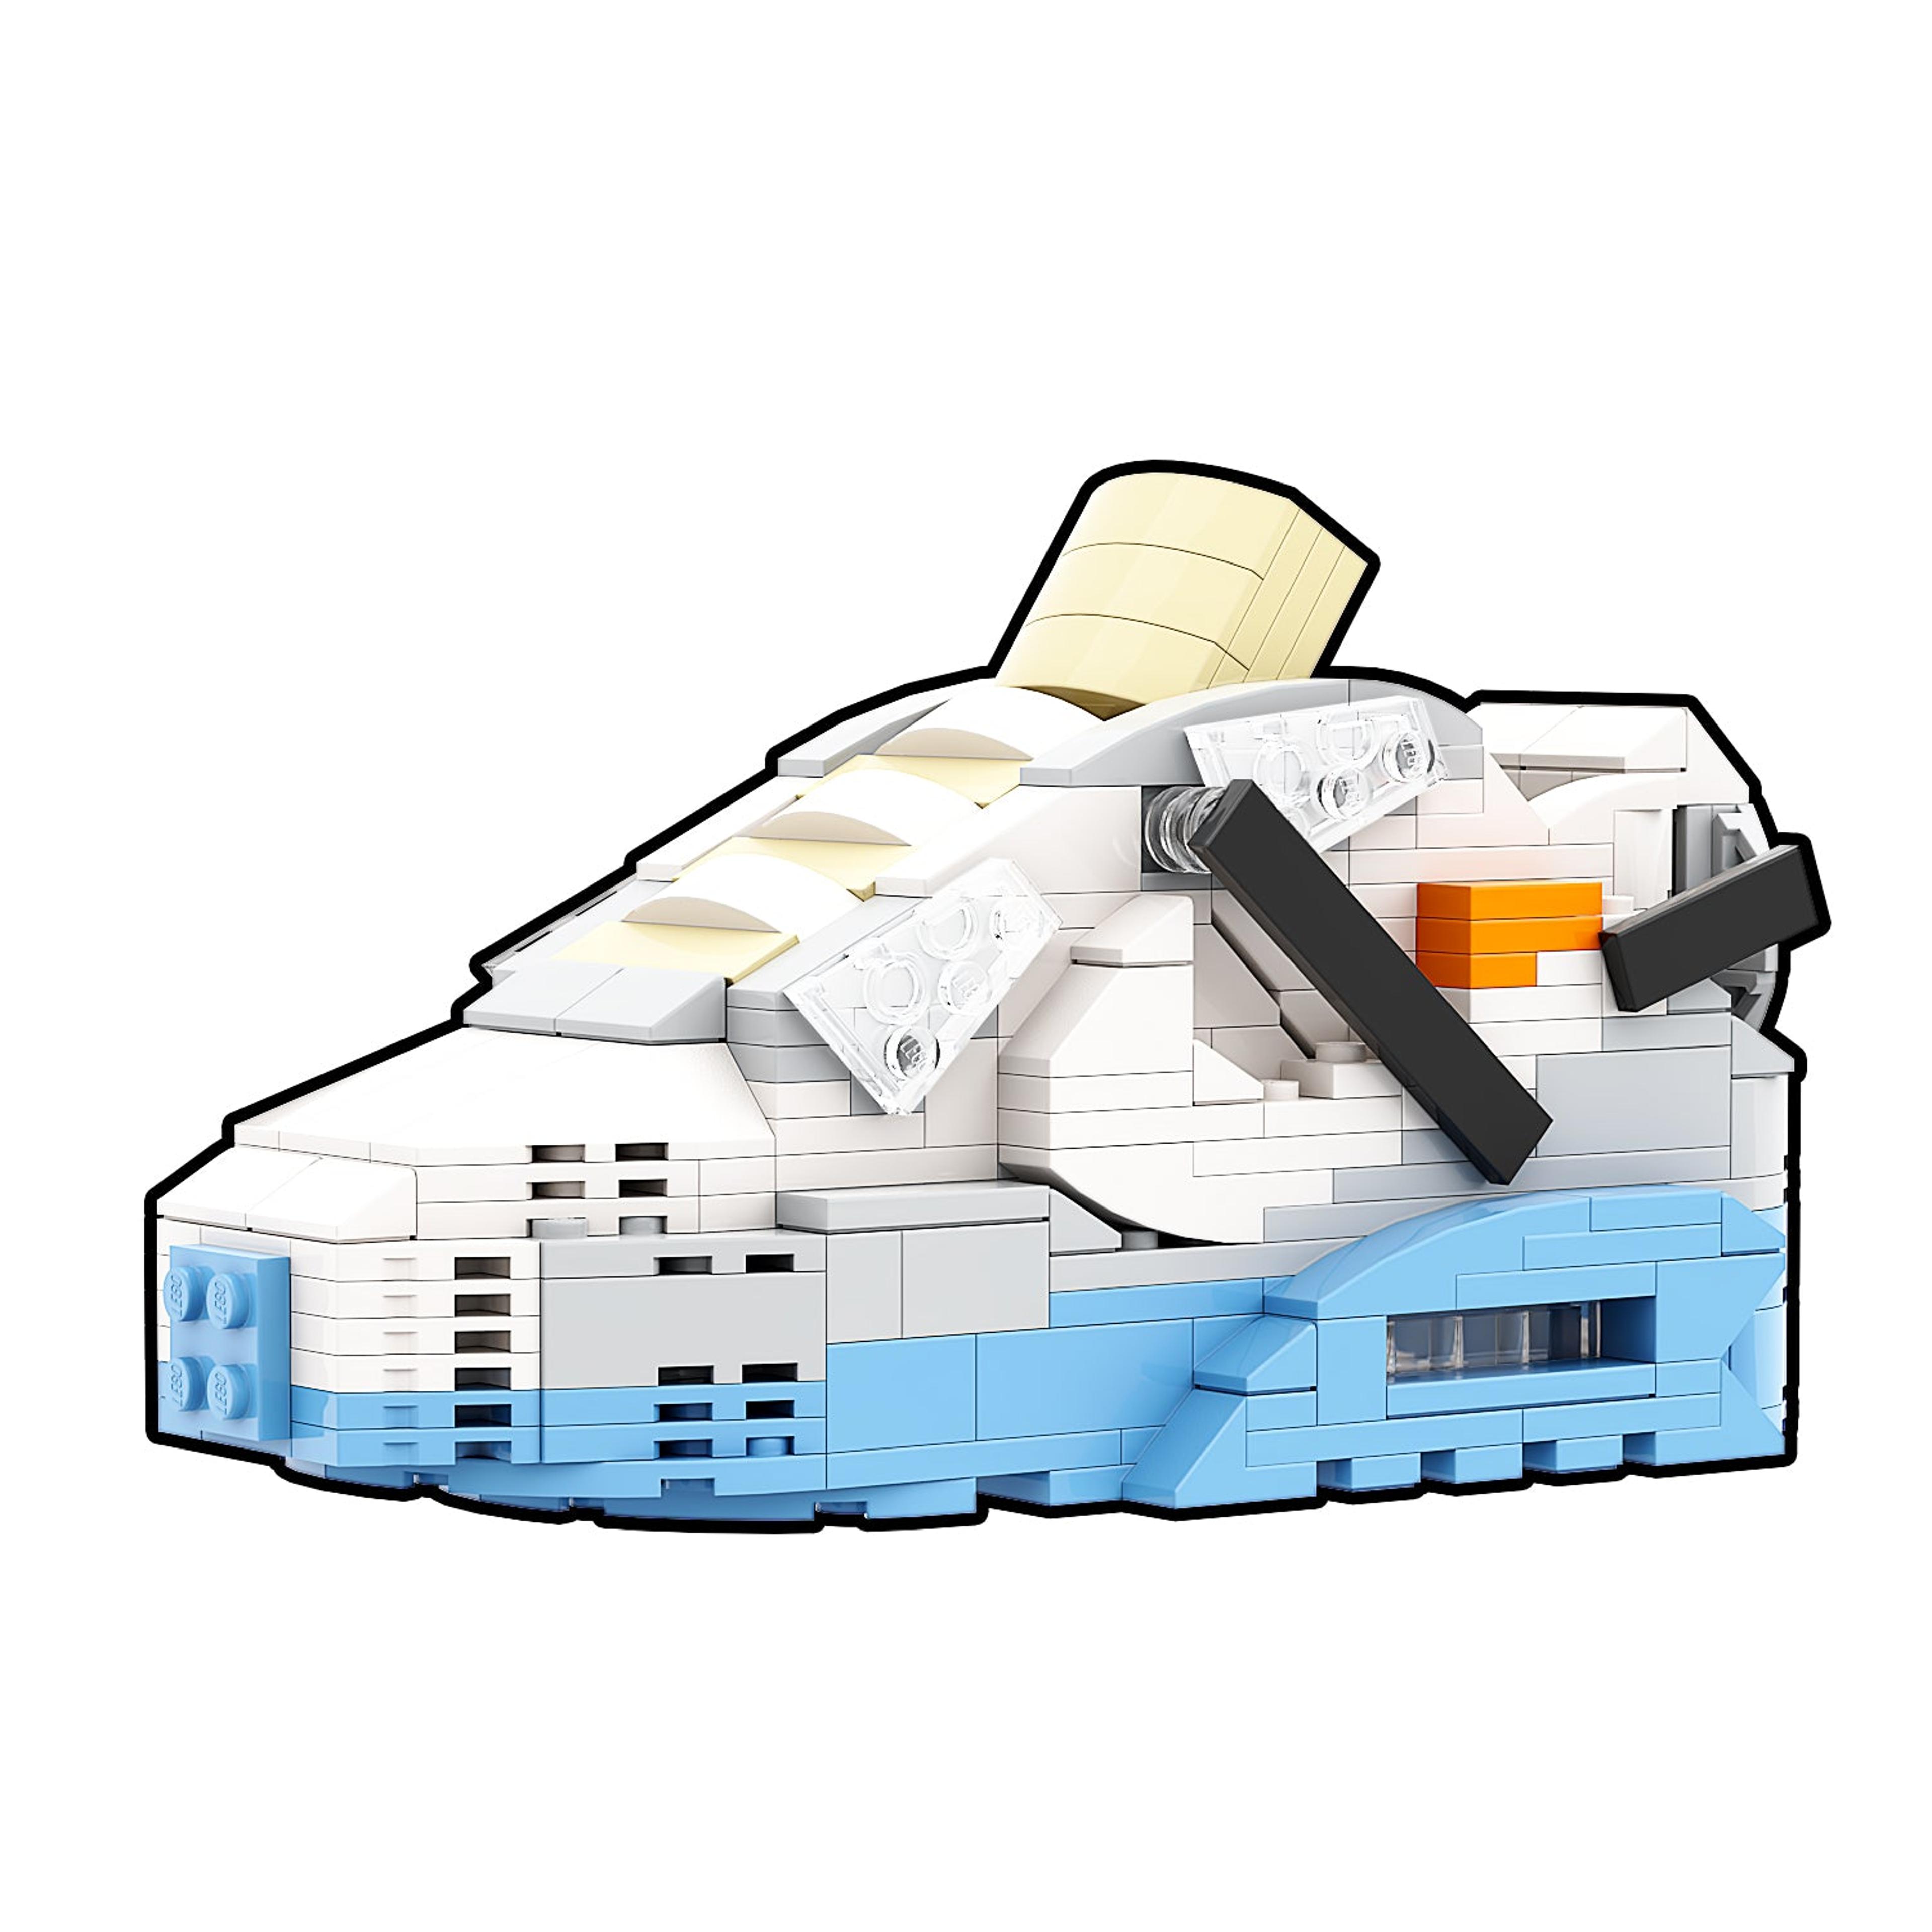 Alternate View 2 of REGULAR Air Max 90 "Off-White White" Sneaker Bricks with Mini Fi